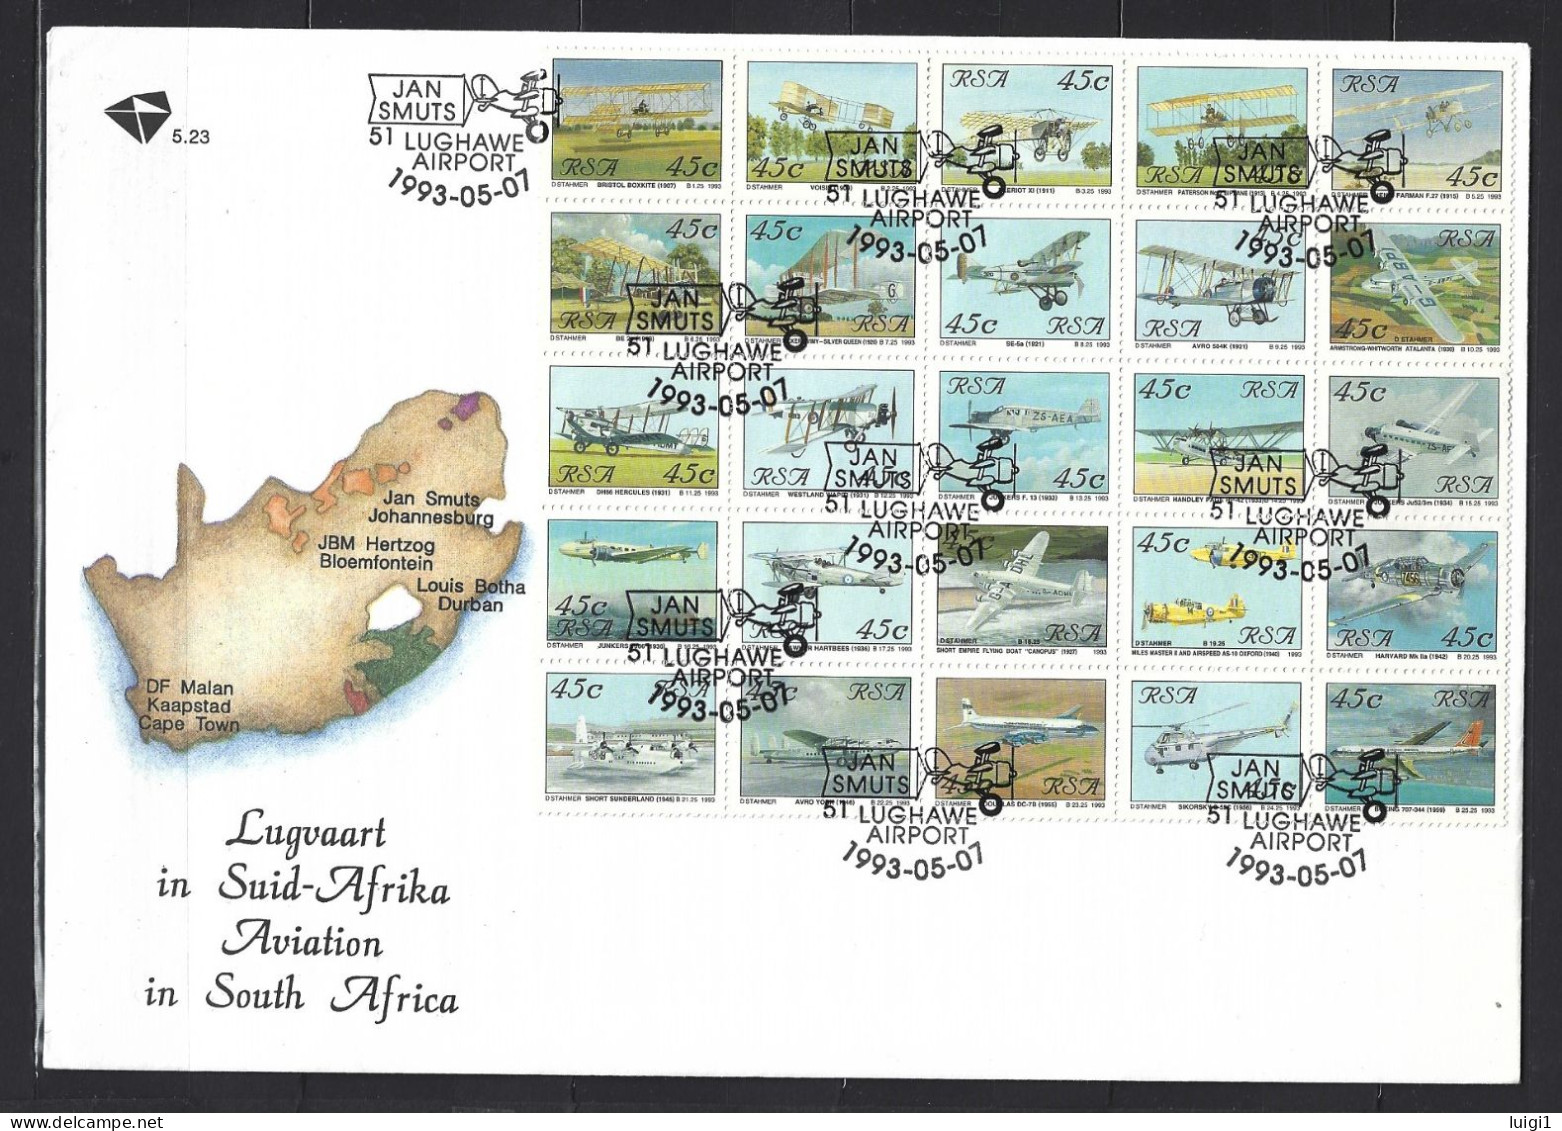 SOUTH AFRICA1993 - Bloc-feuillet Aviation Sud Africaine . Oblitération Du 1993-05-07. JAN SMUTS 51 LUGHAWE AIRPORT. - Briefe U. Dokumente